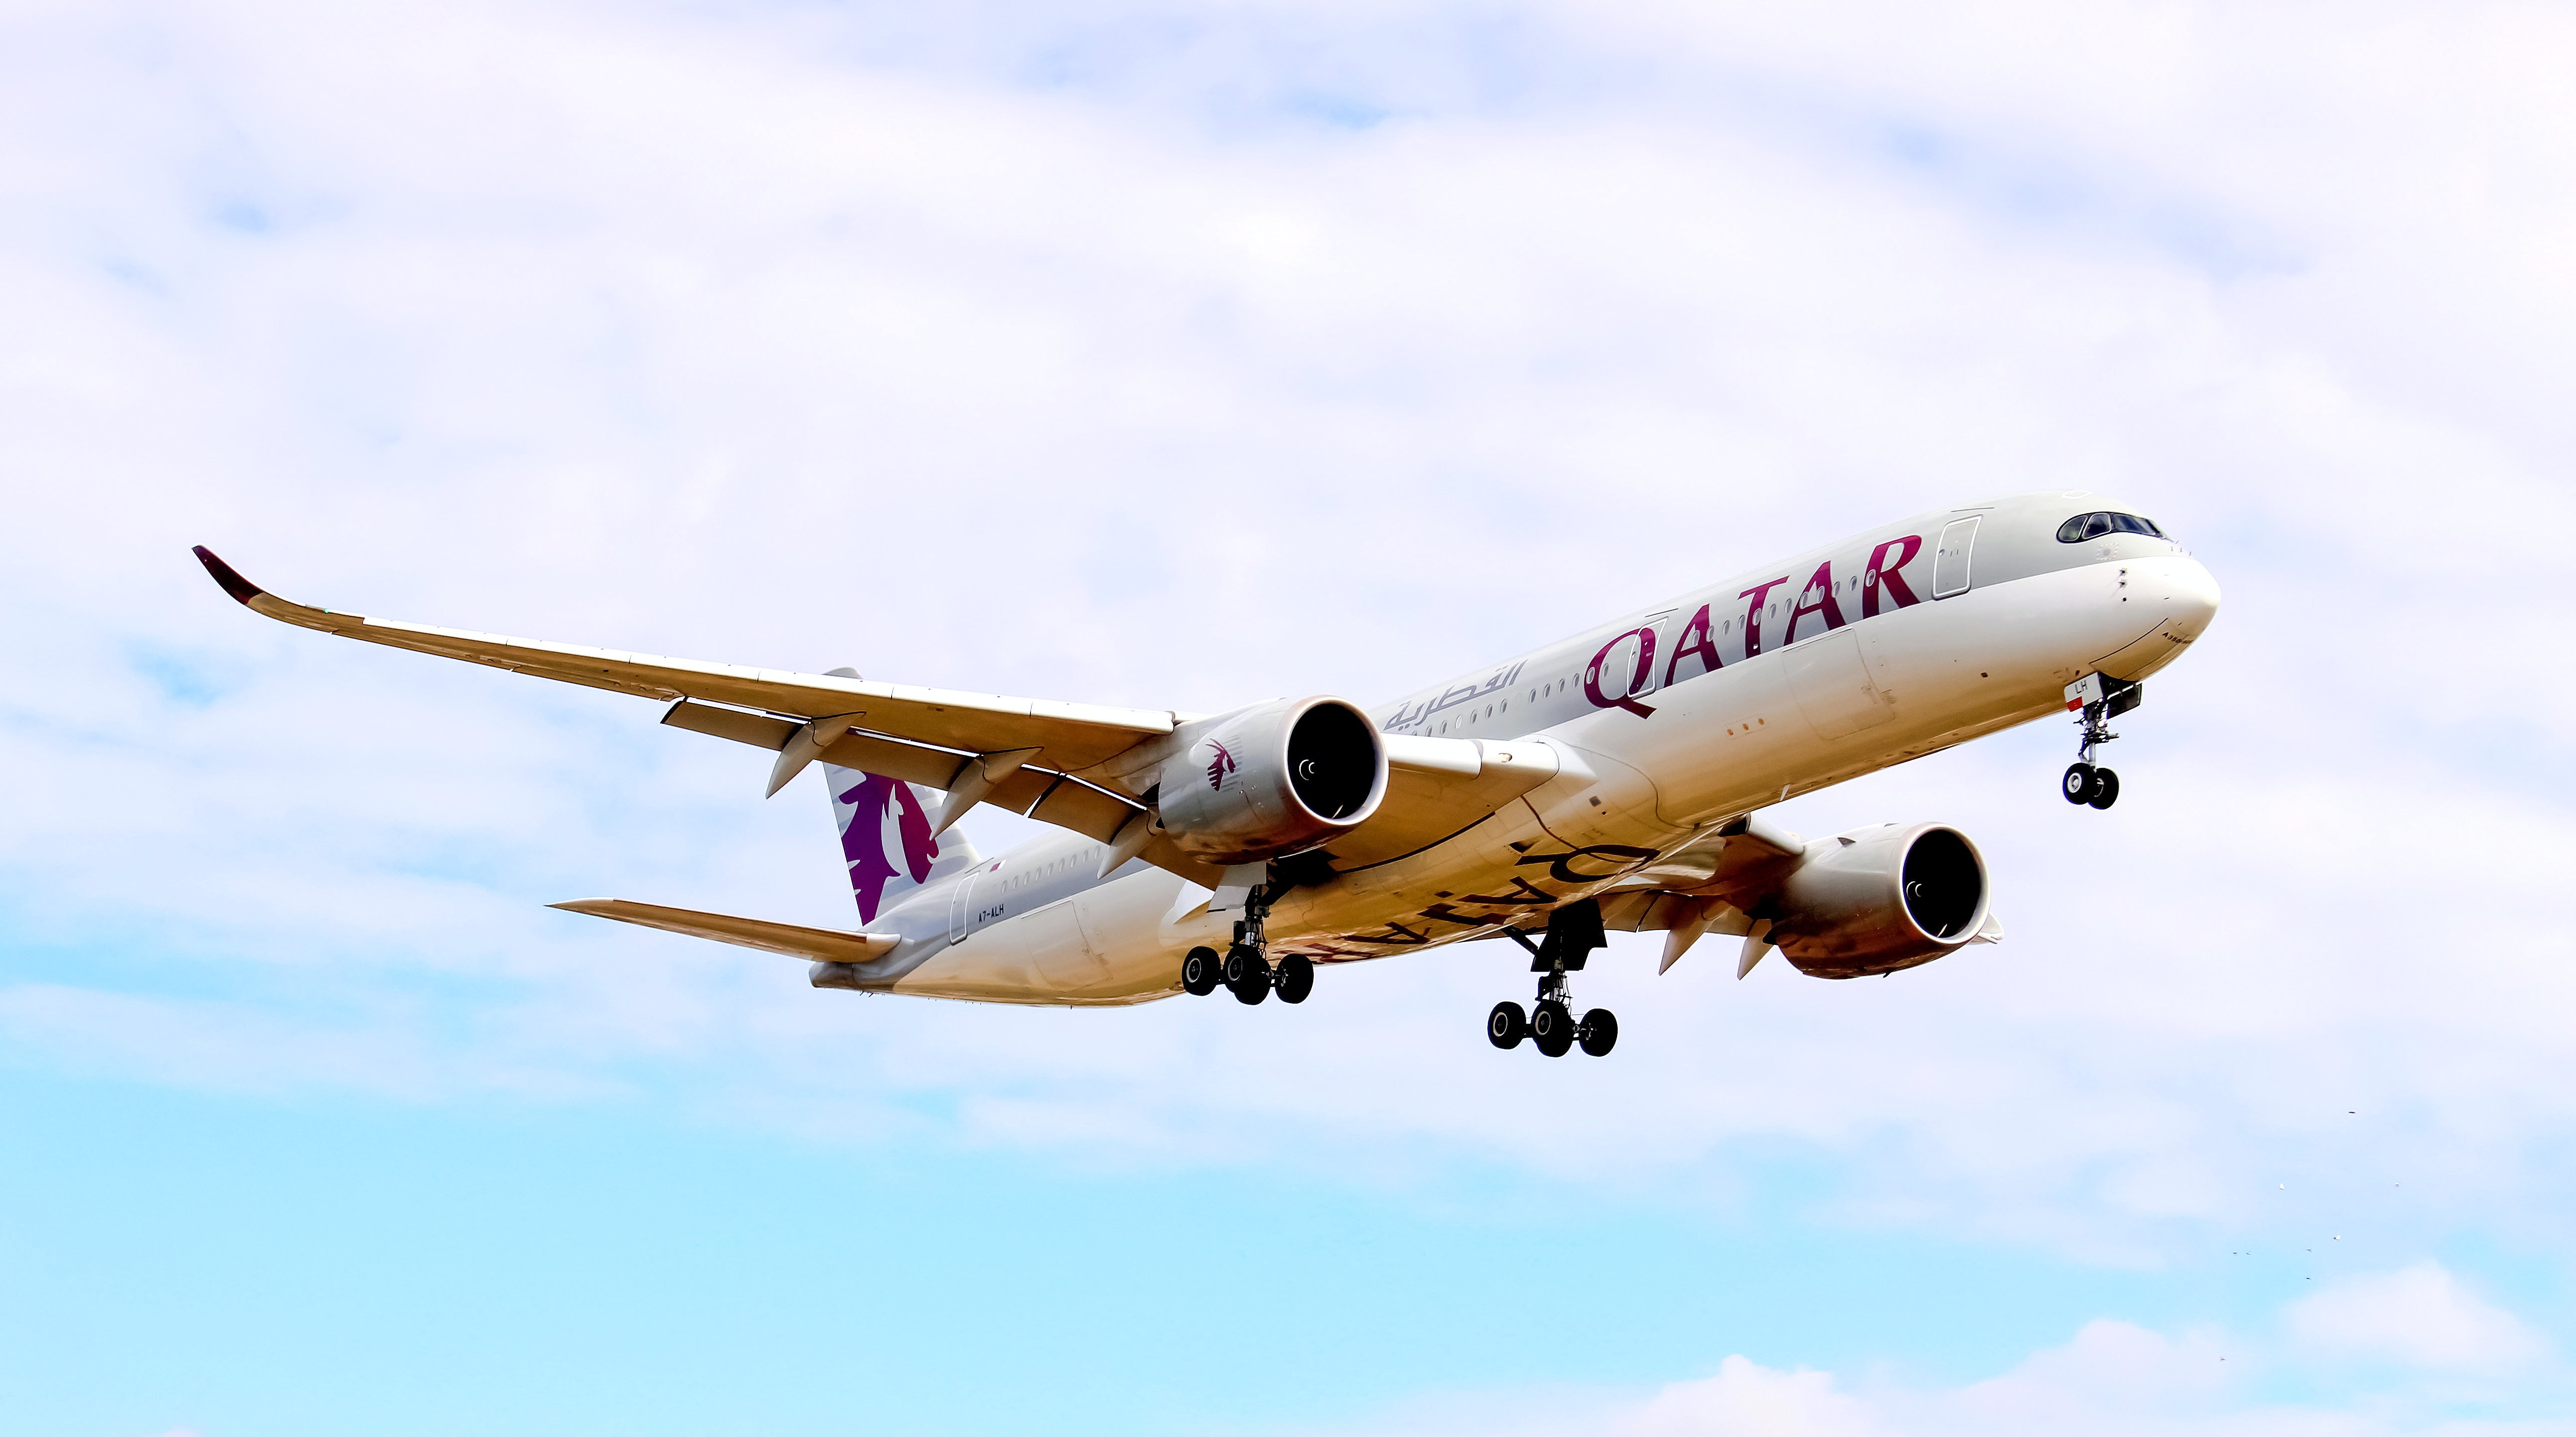 Airbus and Qatar Airways